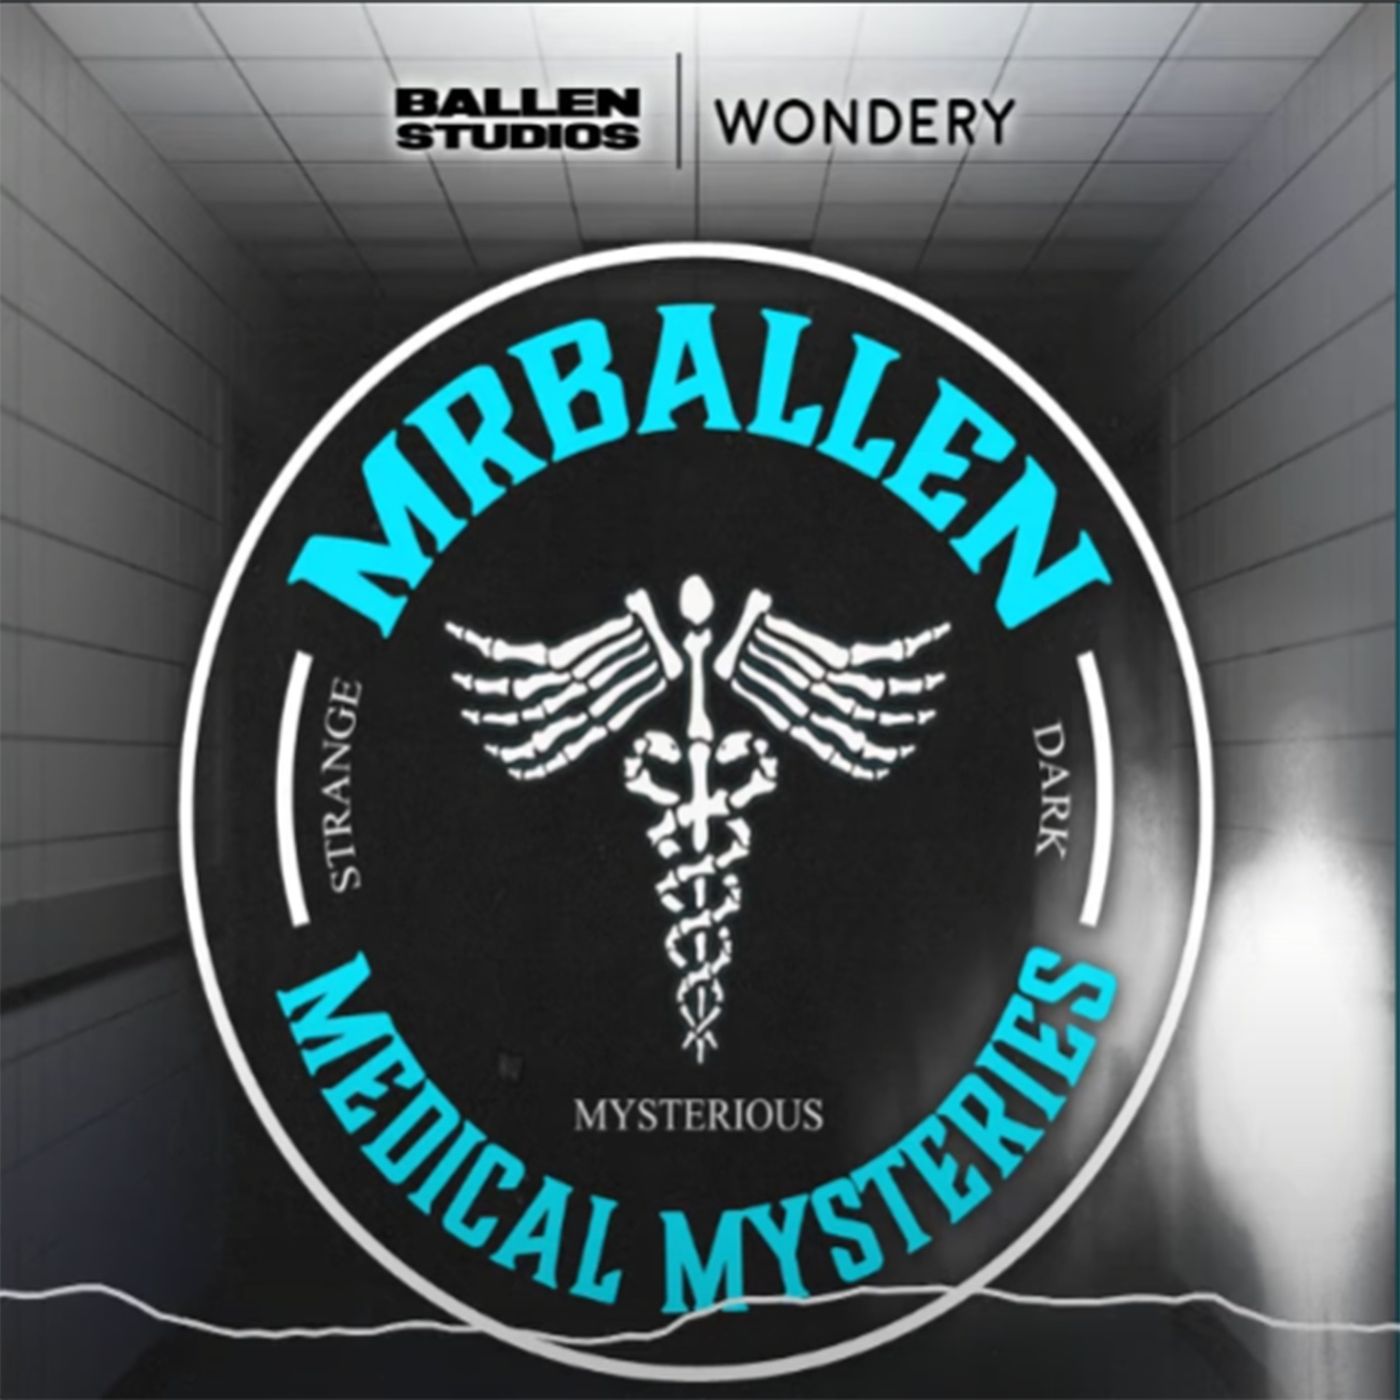 Mr Ballens Medical Mysteries